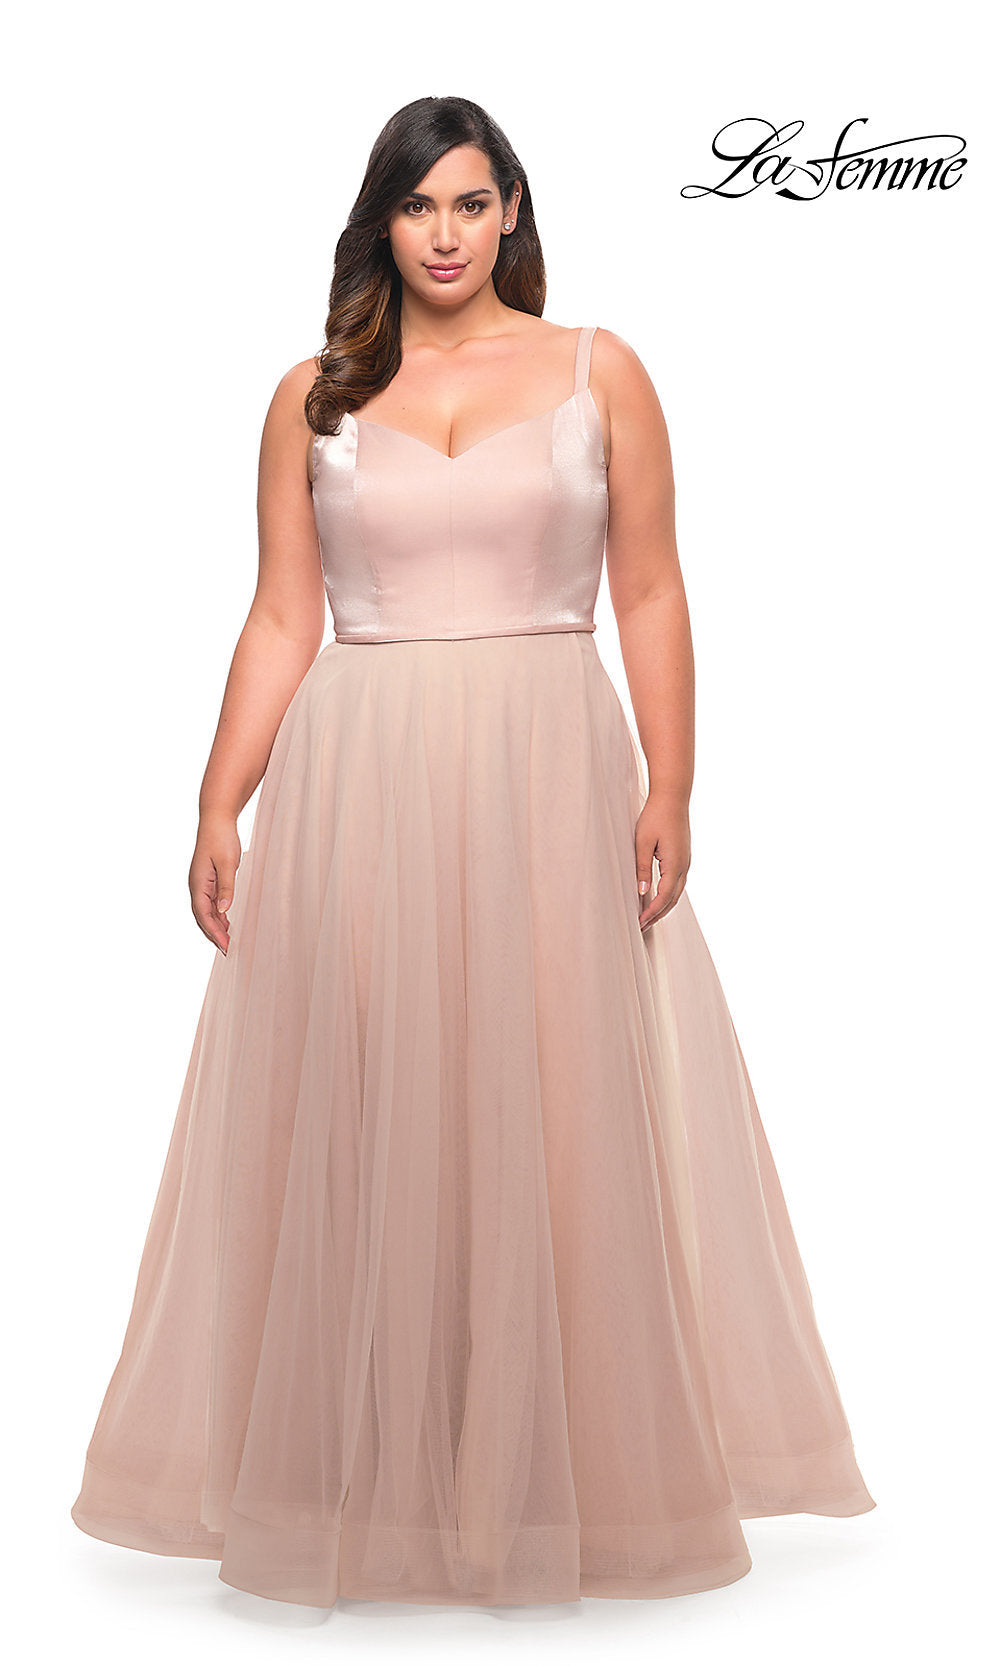 La Femme A-Line Plus-Size Long Prom Dress - PromGirl Blush / 14W